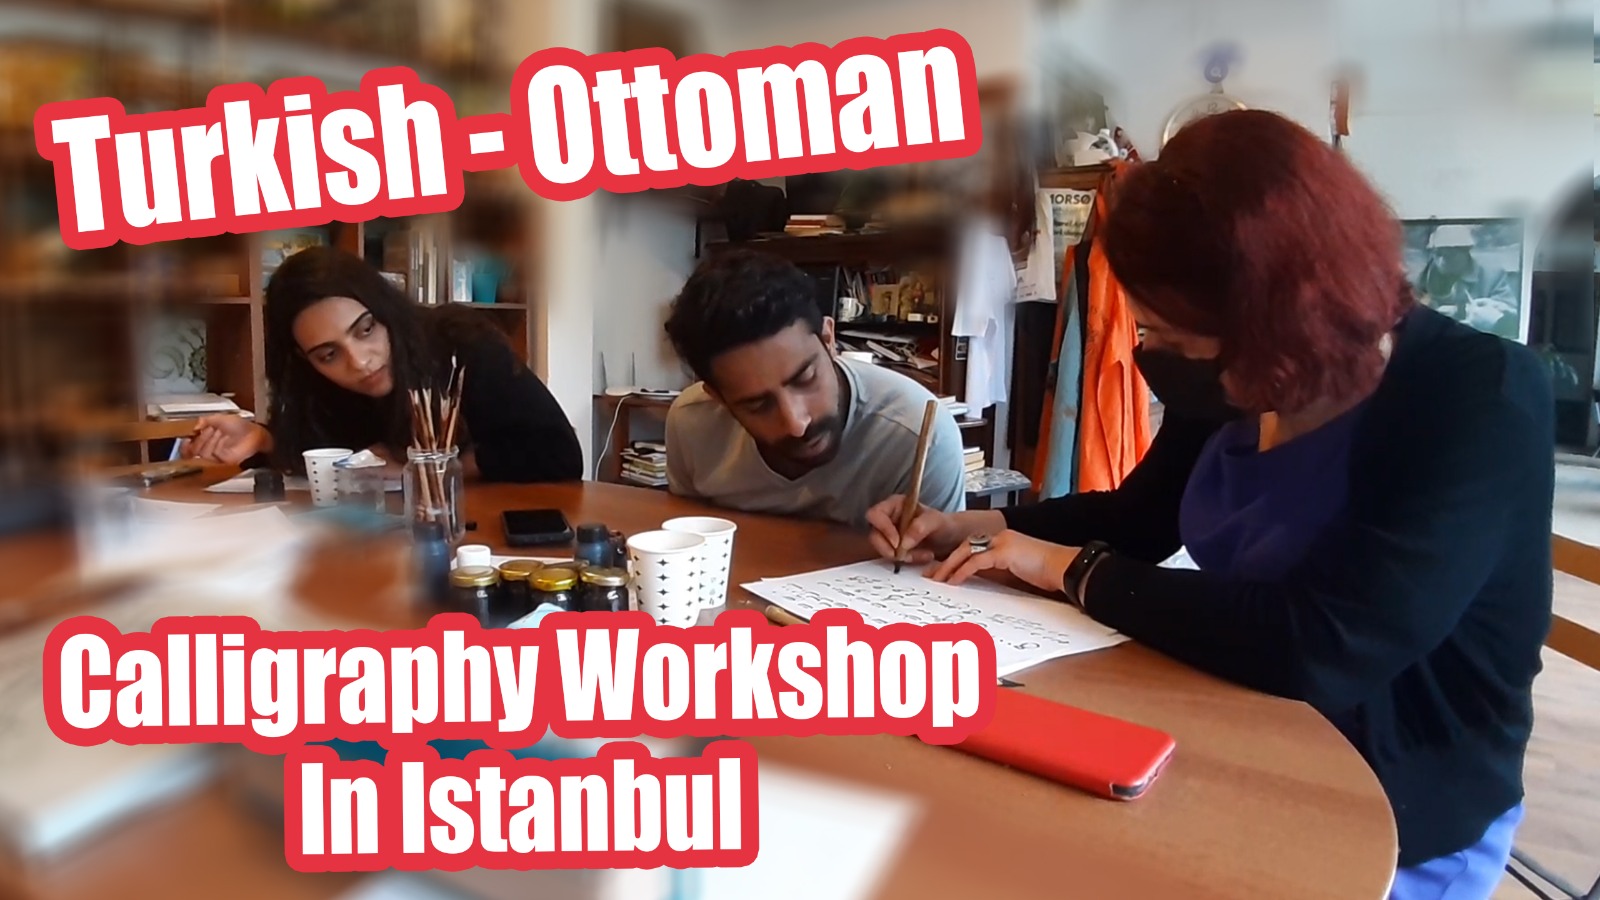 Turkish,Ottoman,Arabic.Latin Calligraphy Workshops in Istanbul